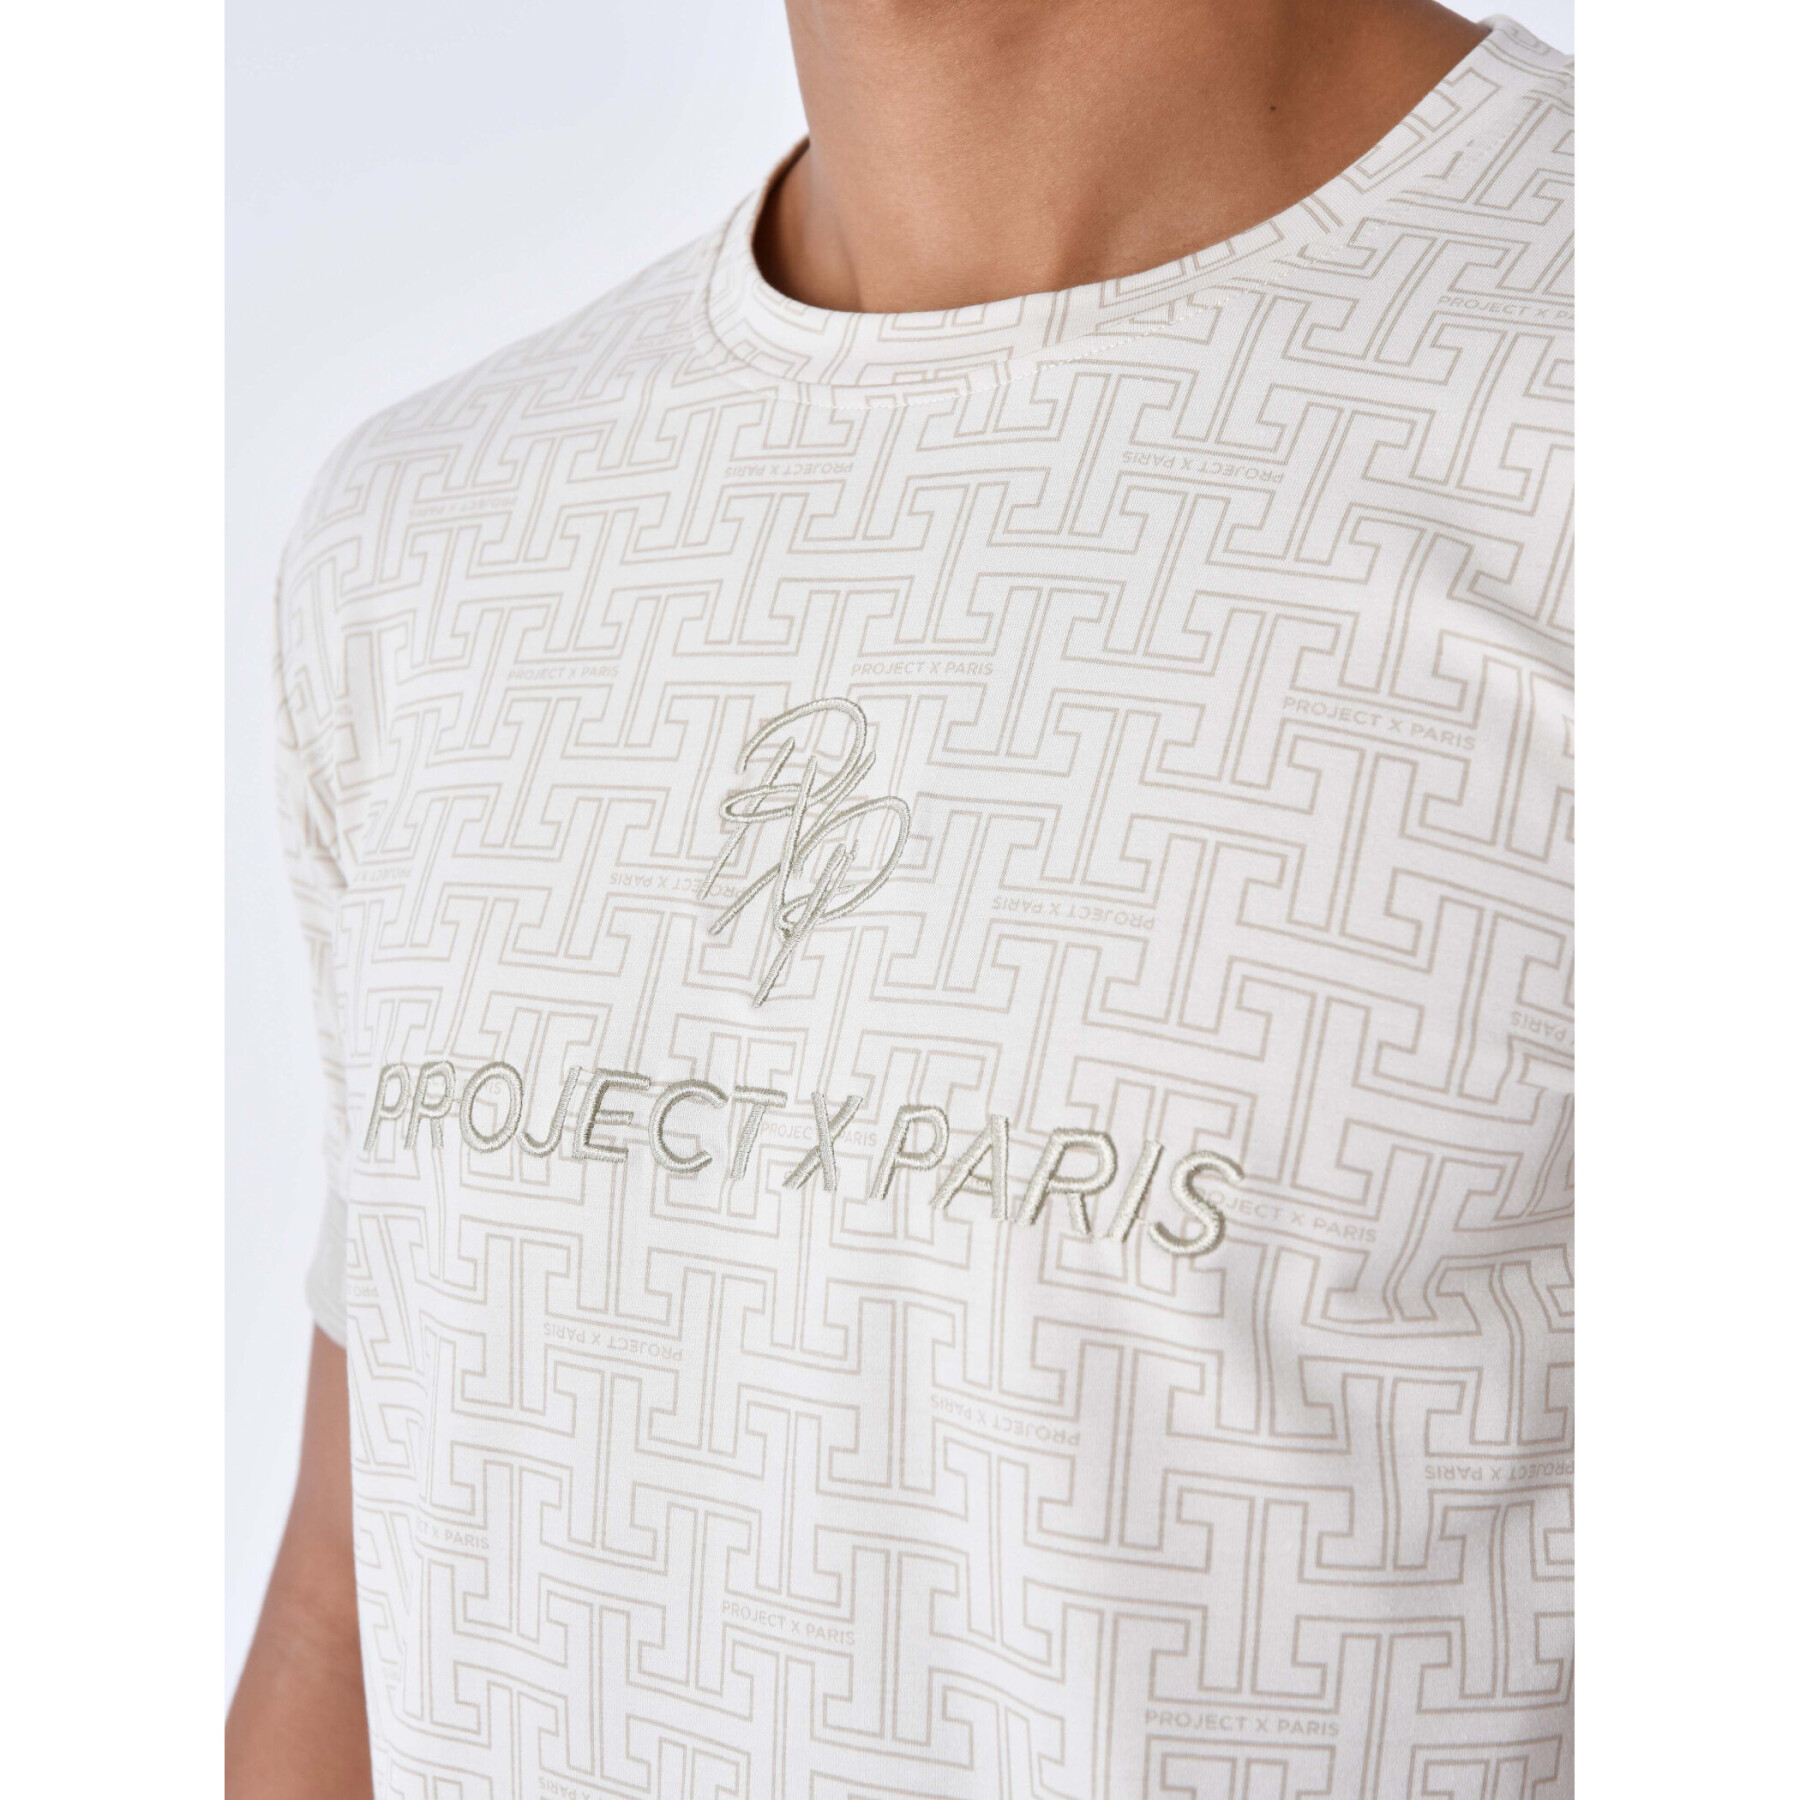 T-shirt com estampado Labyrinth Project X Paris